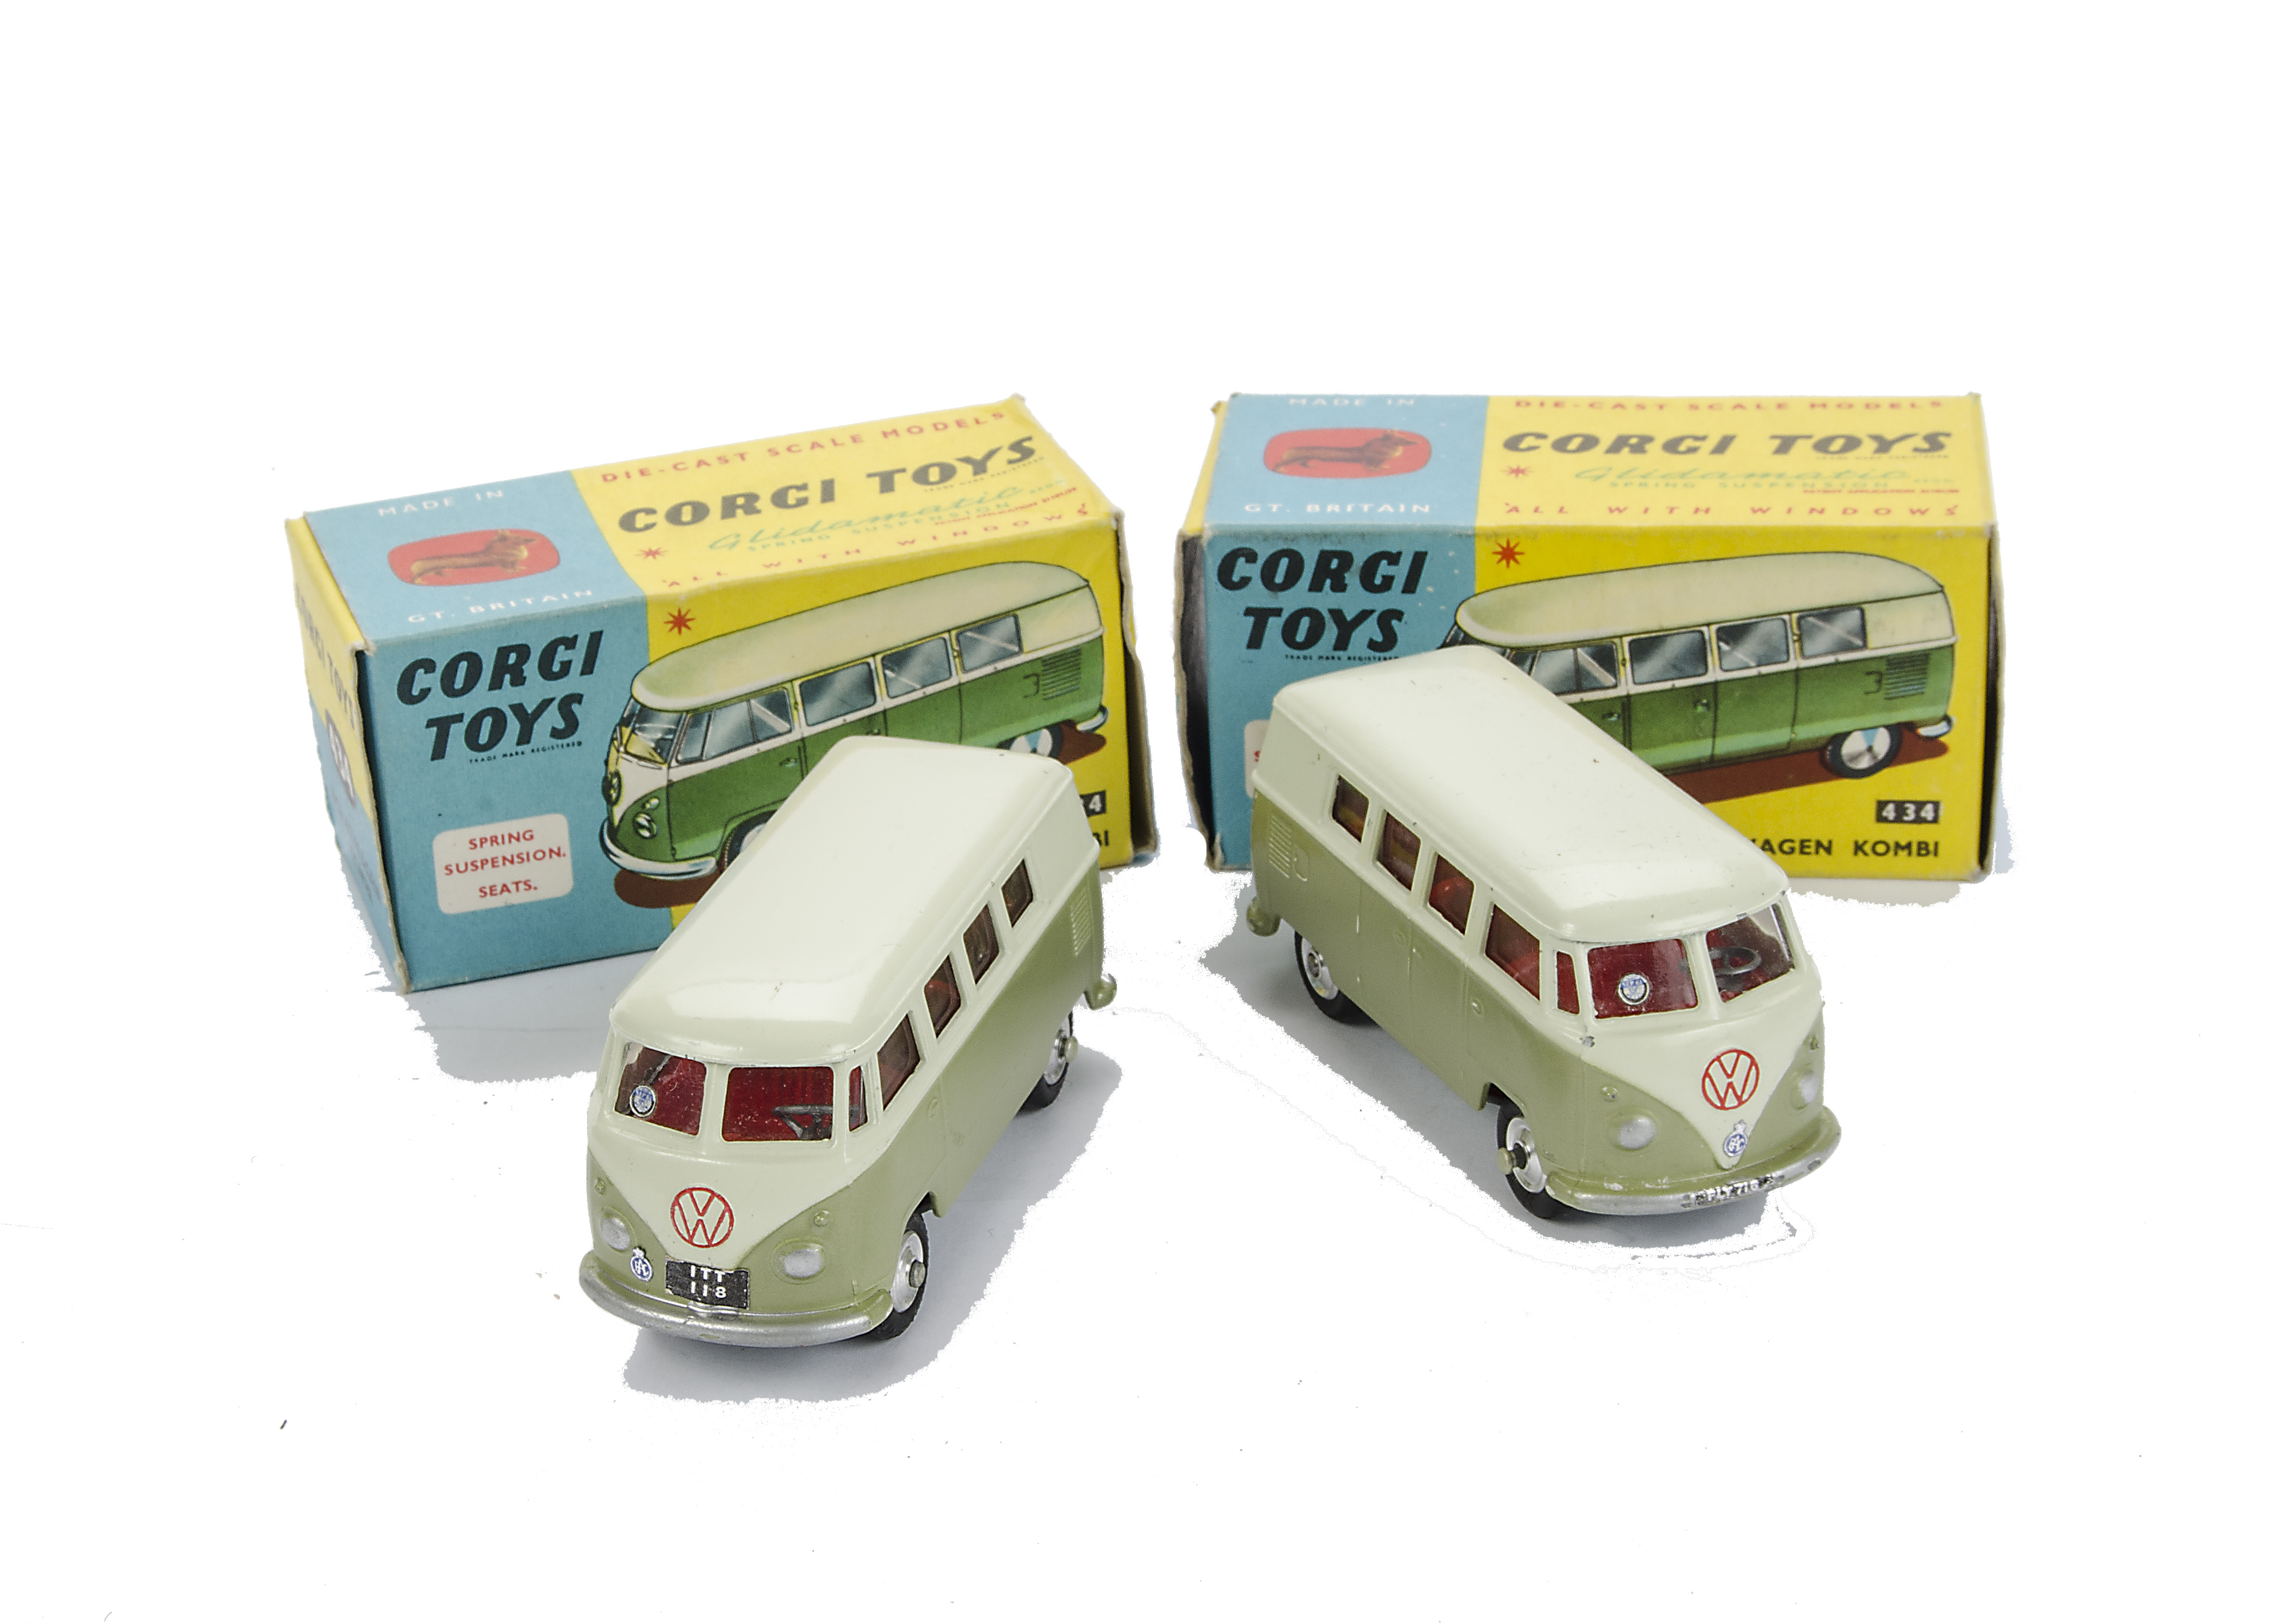 Corgi Toys 434 Volkswagen Kombi, two tone green body, red interior, two examples, in original boxes,